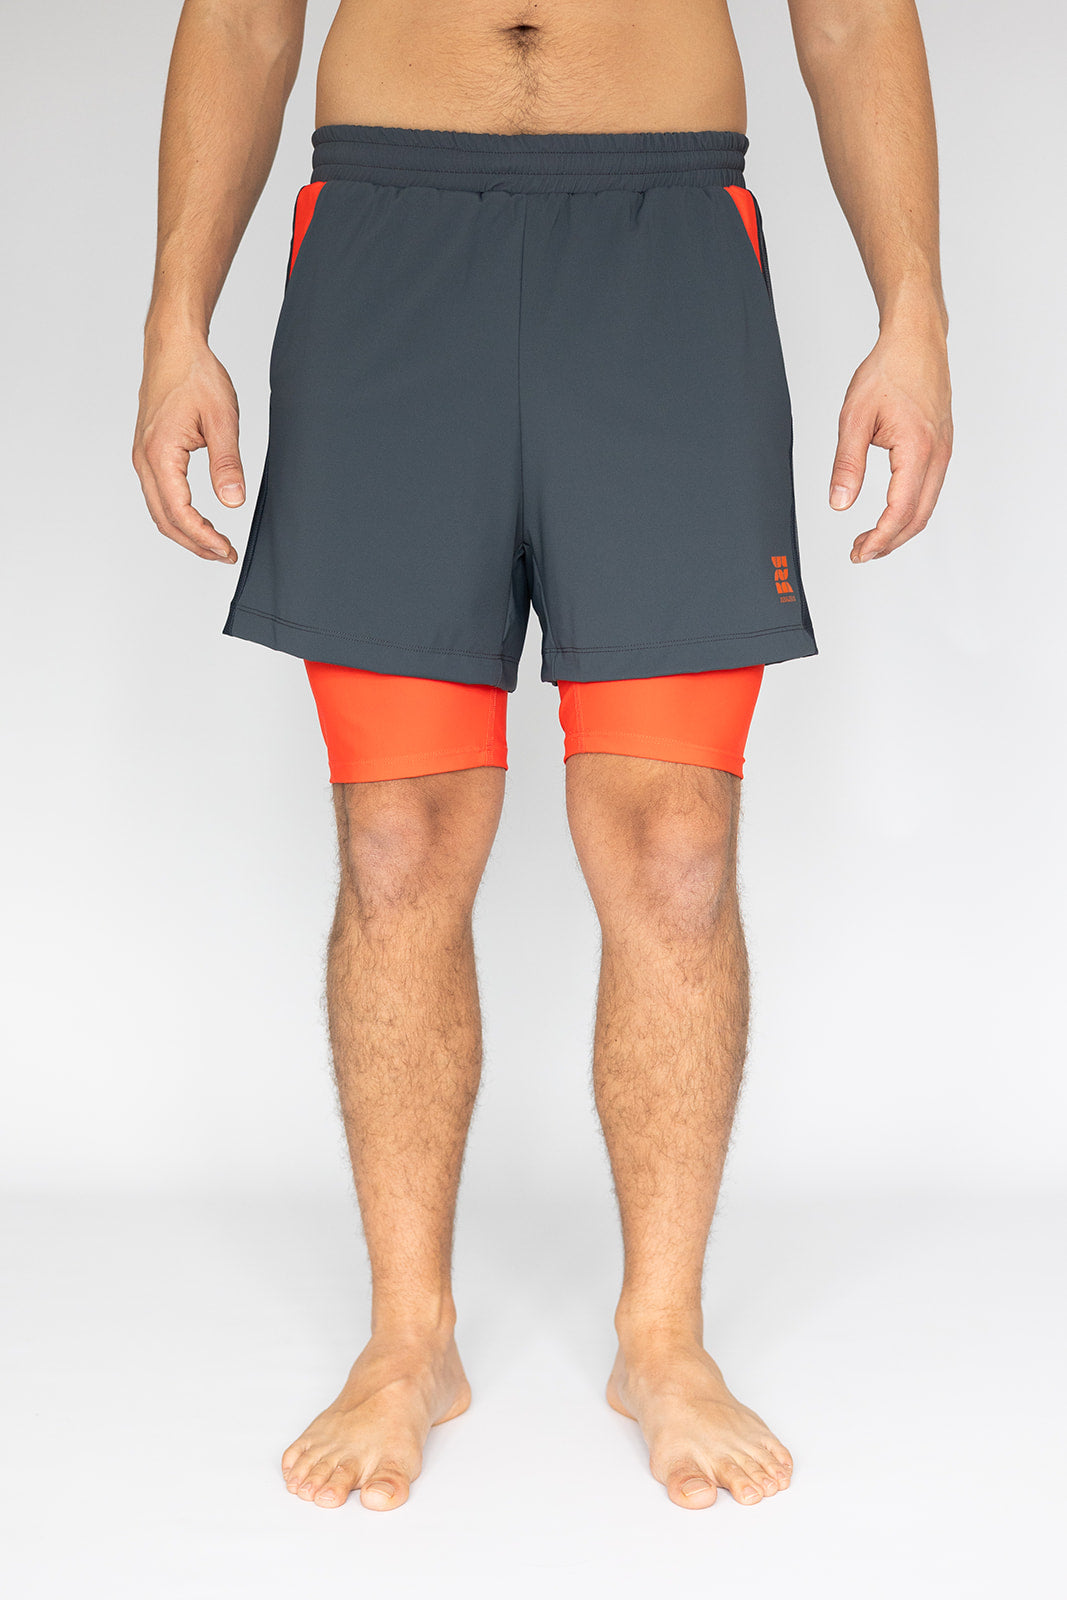 Conall 2-in-1 Shorts-Shorts-zed & zeus-Grey/Coral-L-ZED & ZEUS